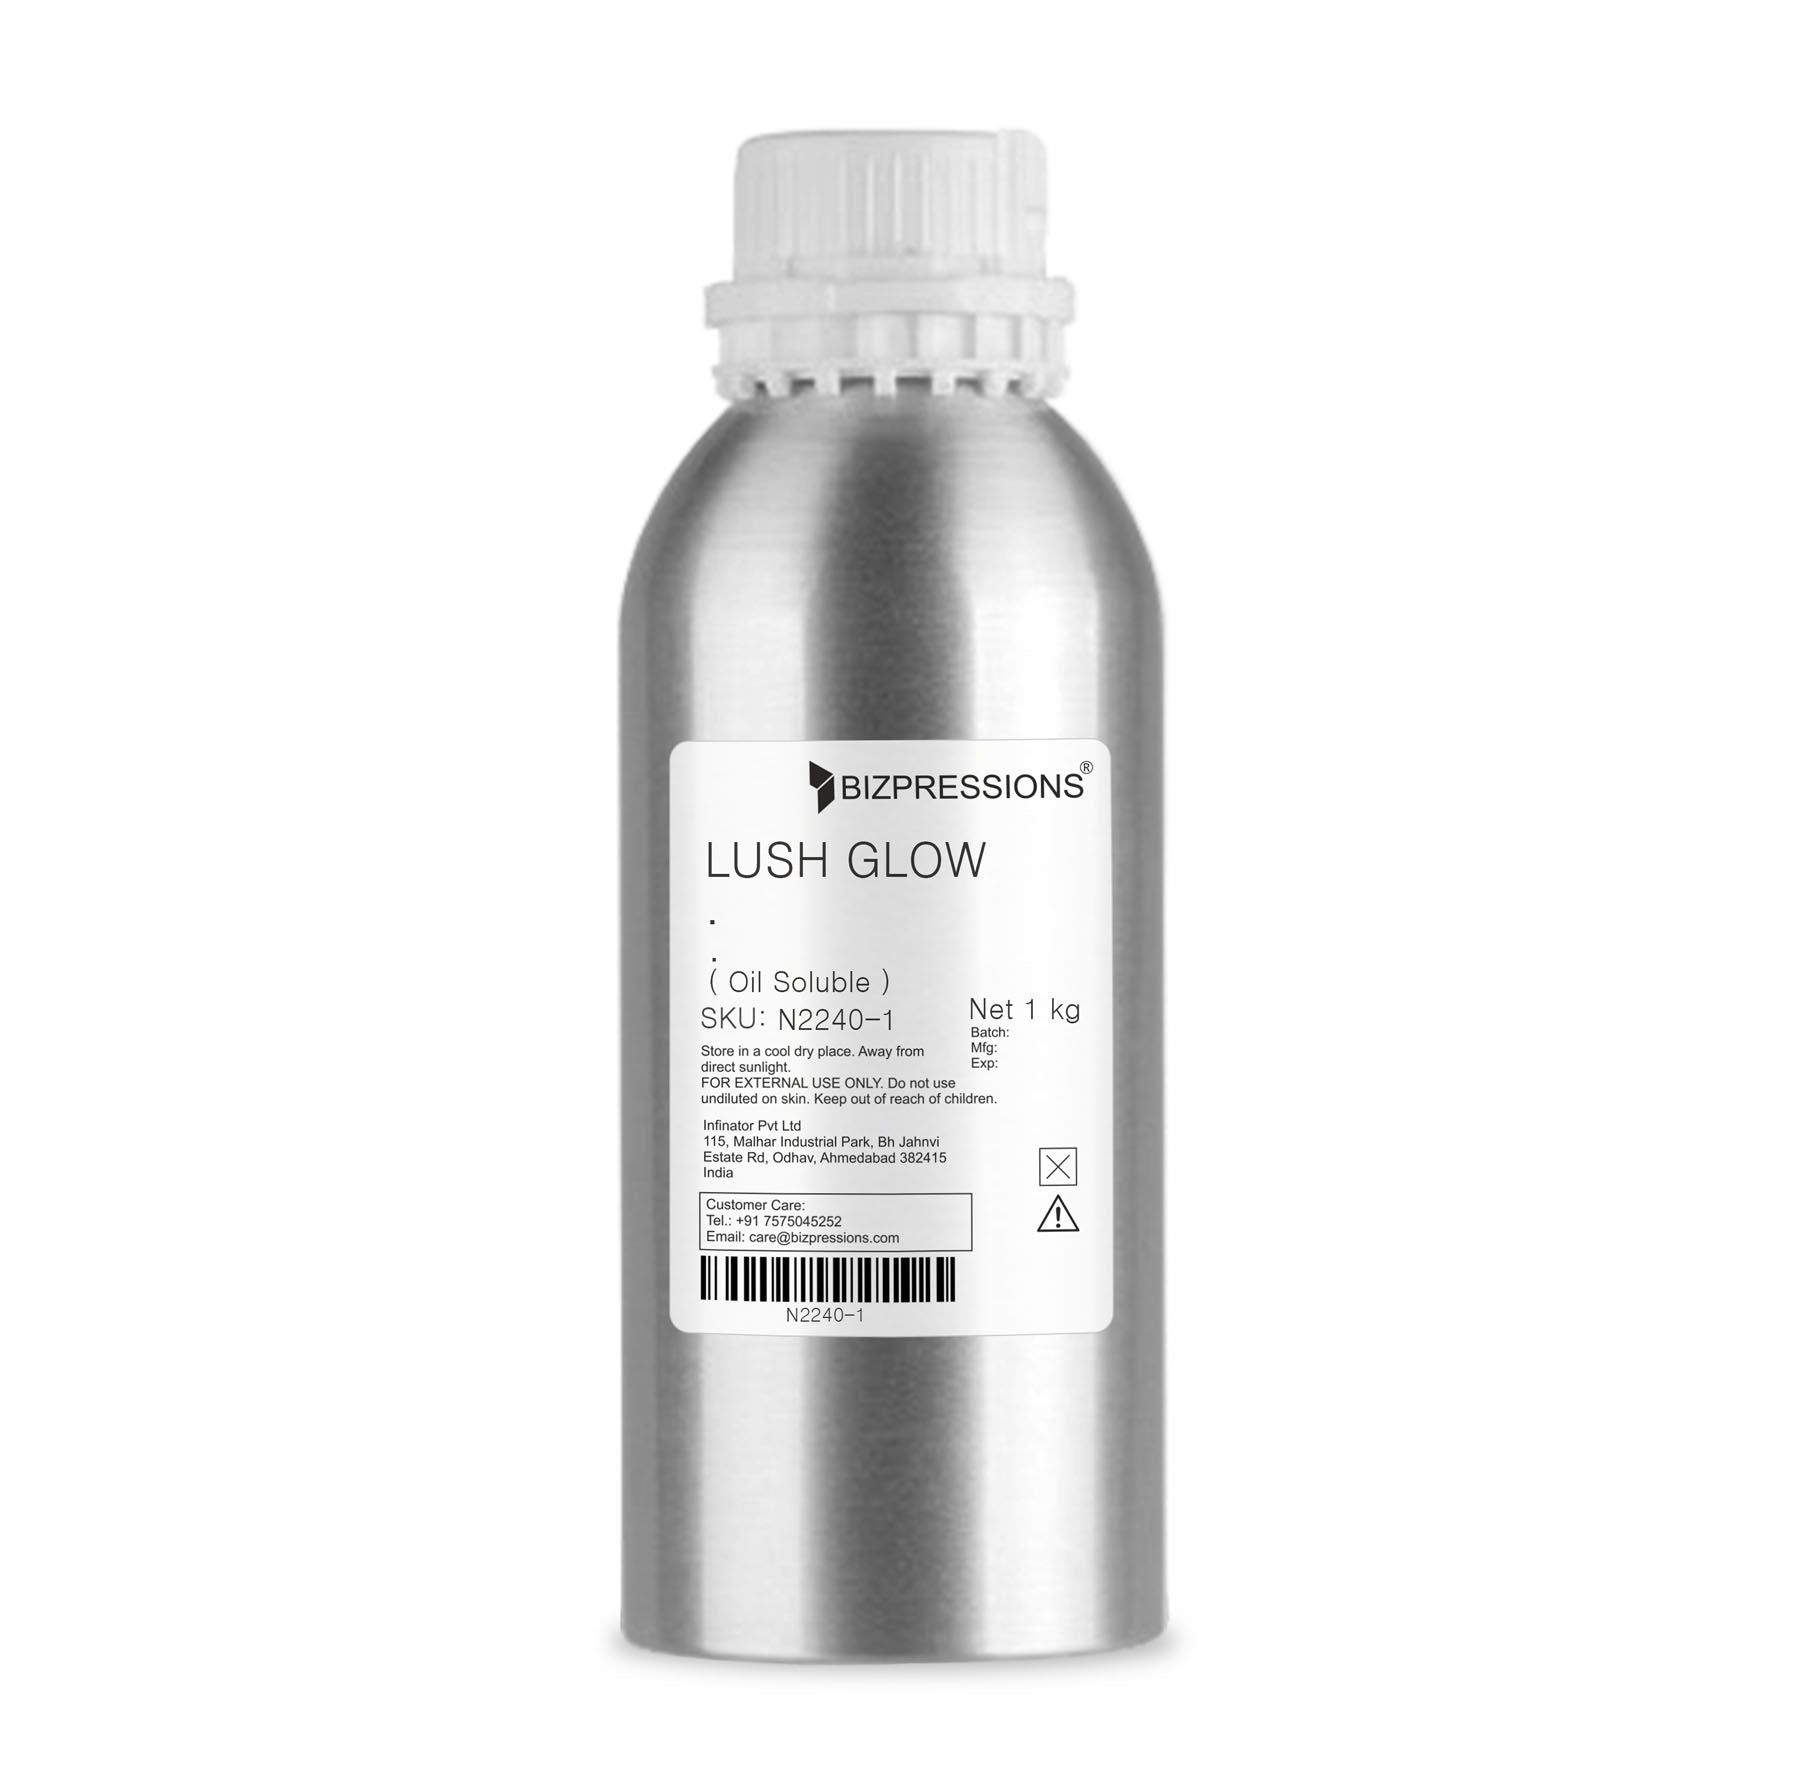 LUSH GLOW - Fragrance ( Oil Soluble ) - 1 kg